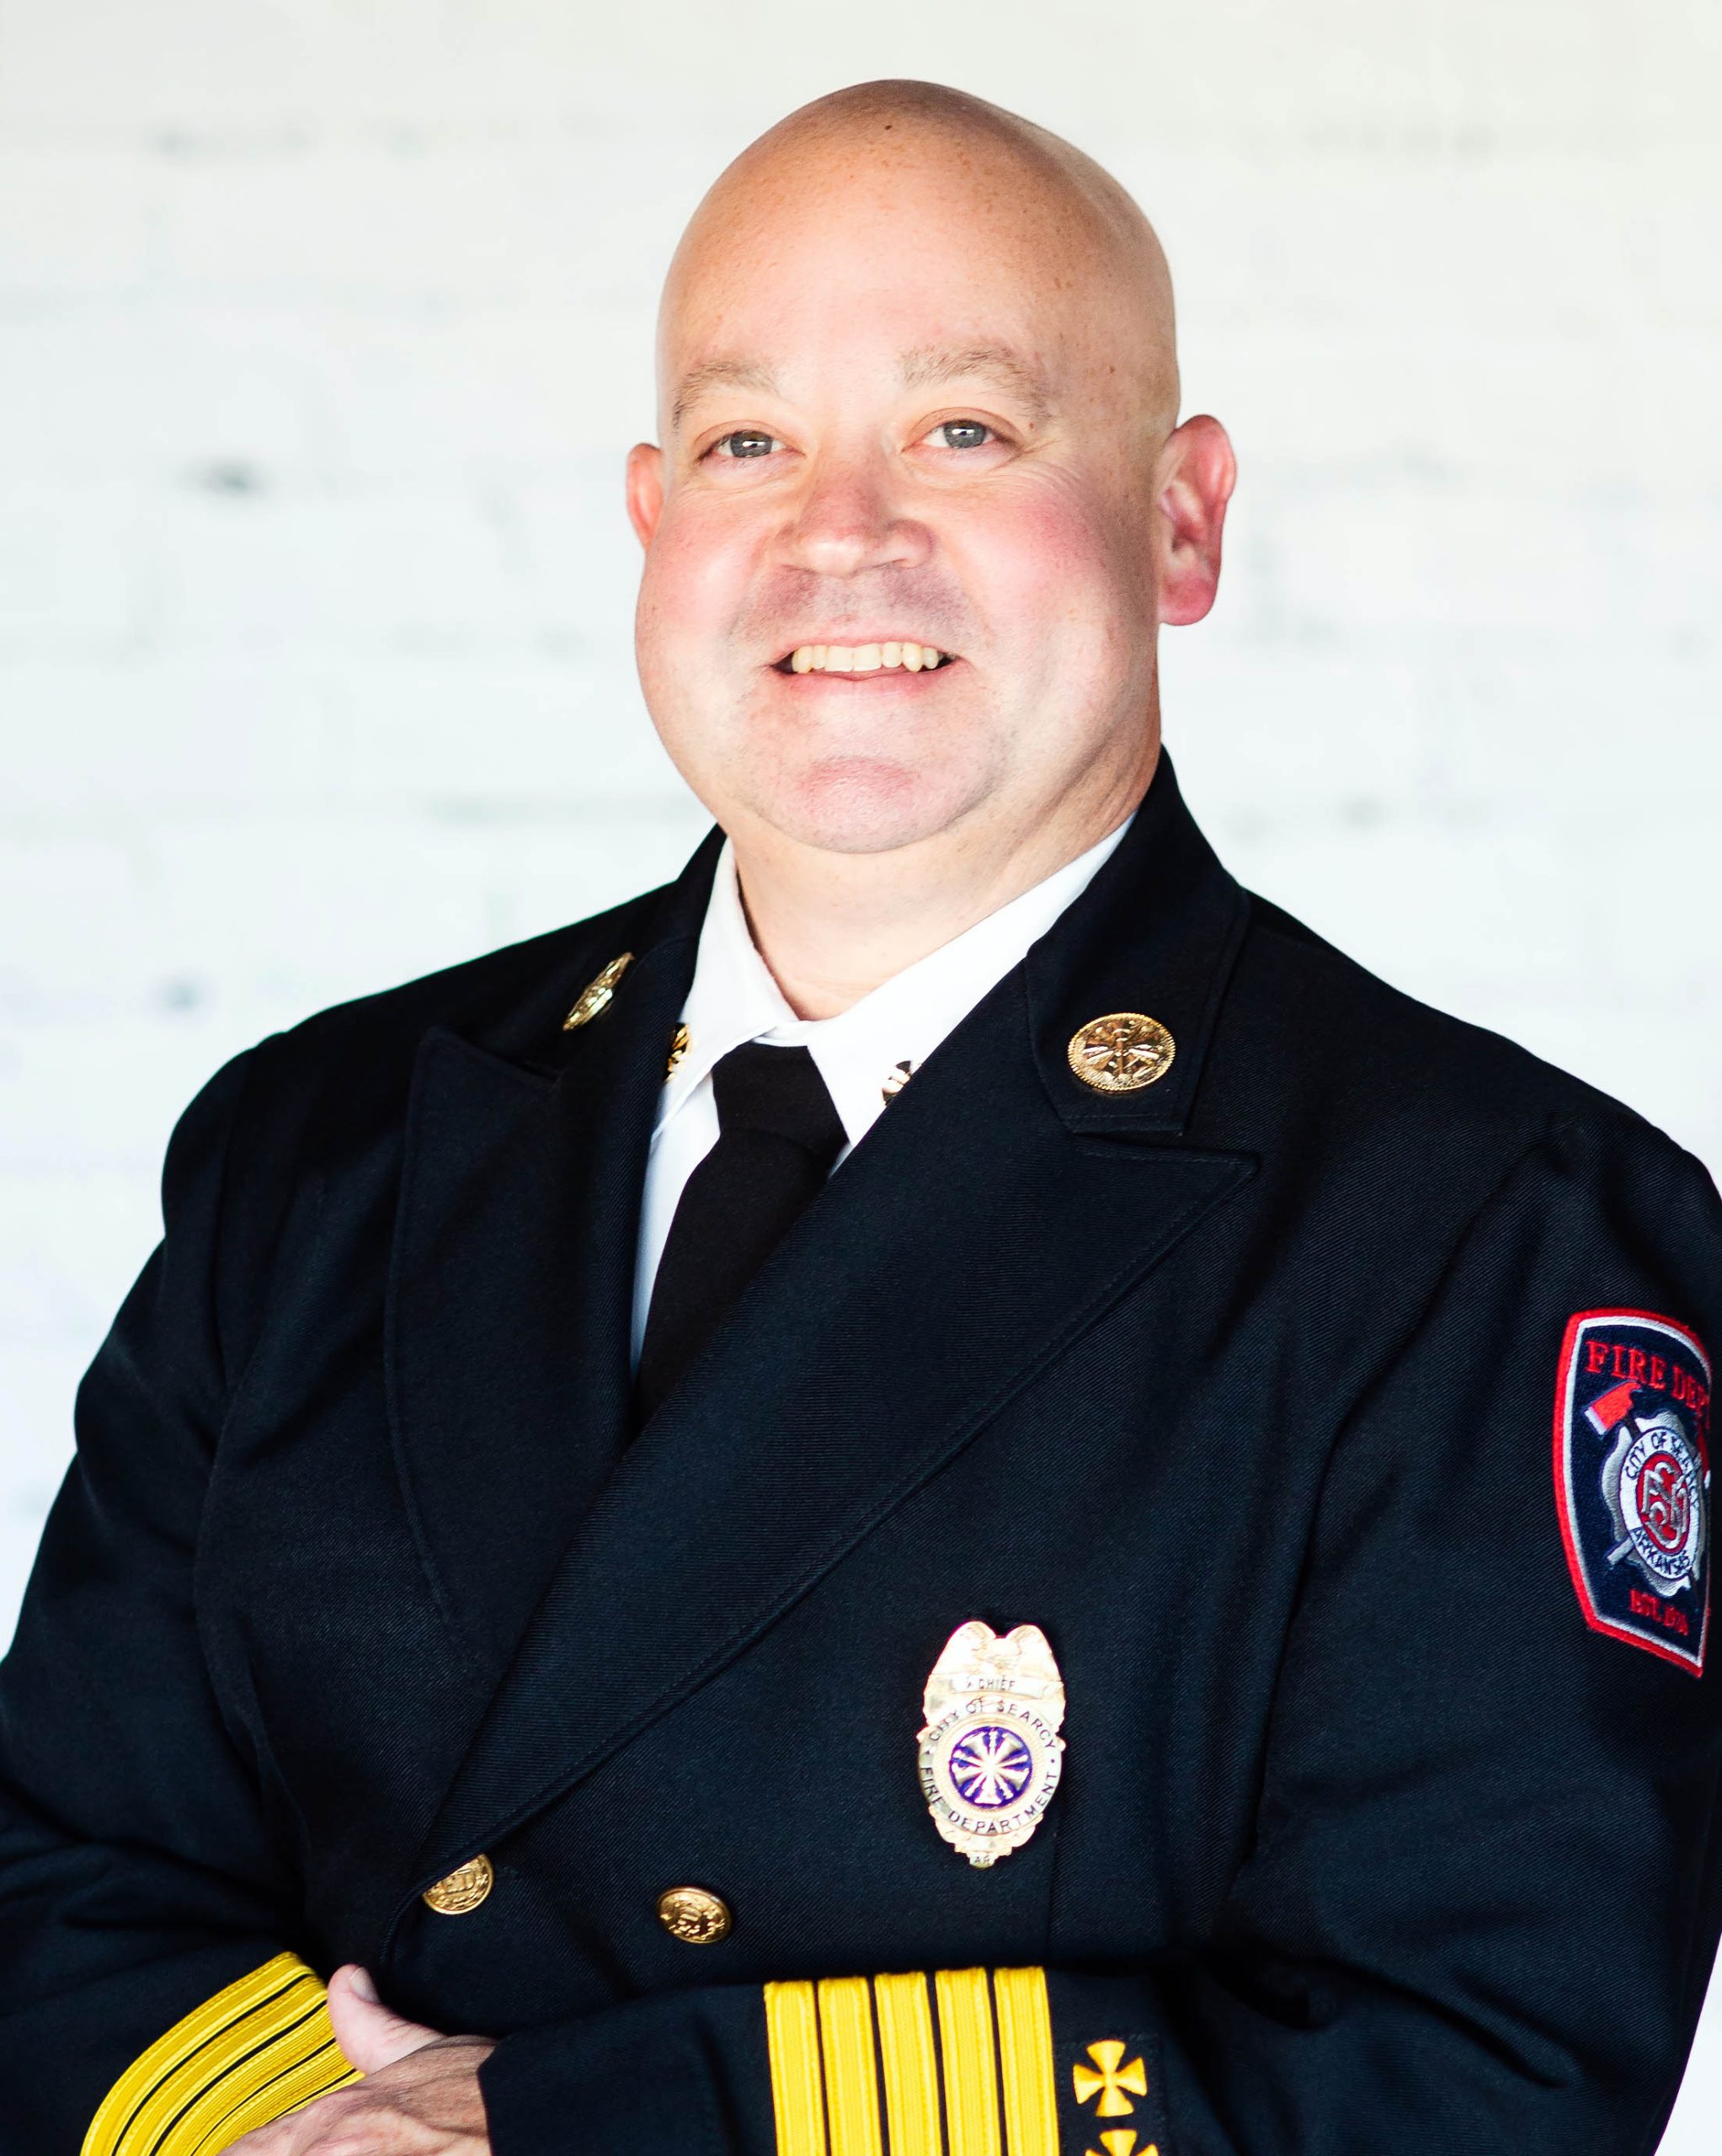 man smiling in fire officer uniform